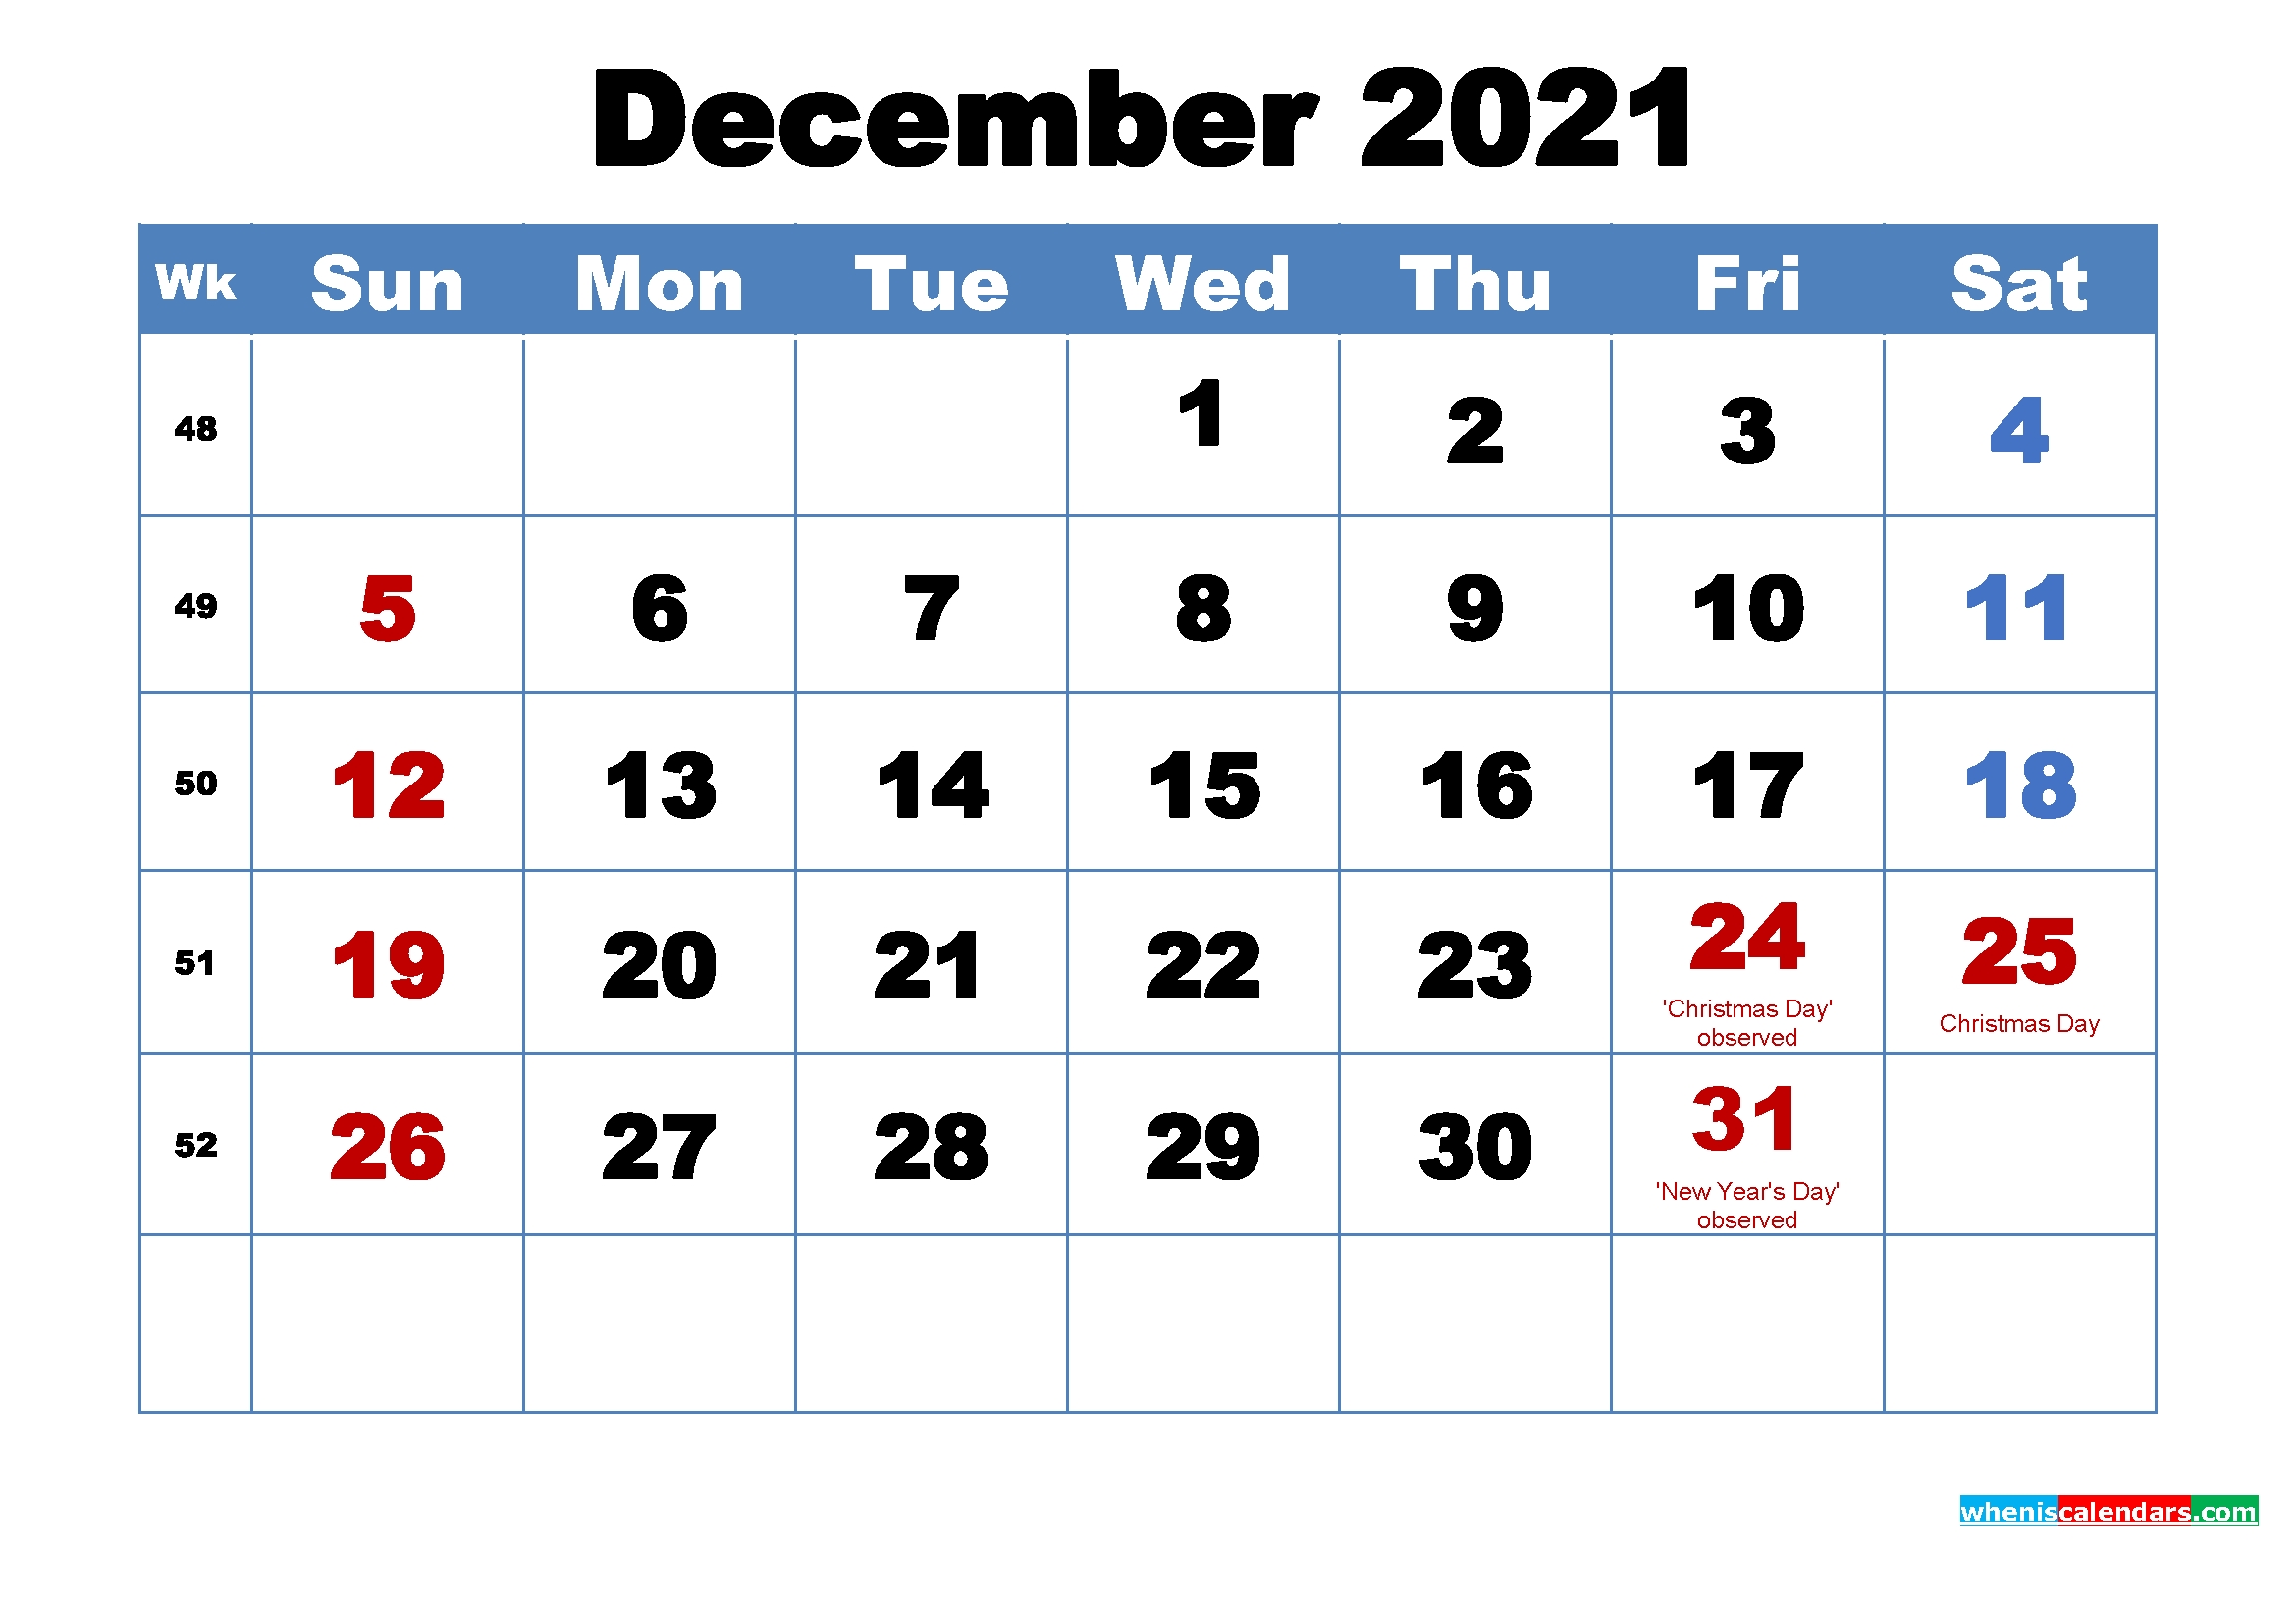 December 2021 Calendar Wallpaper Free Download